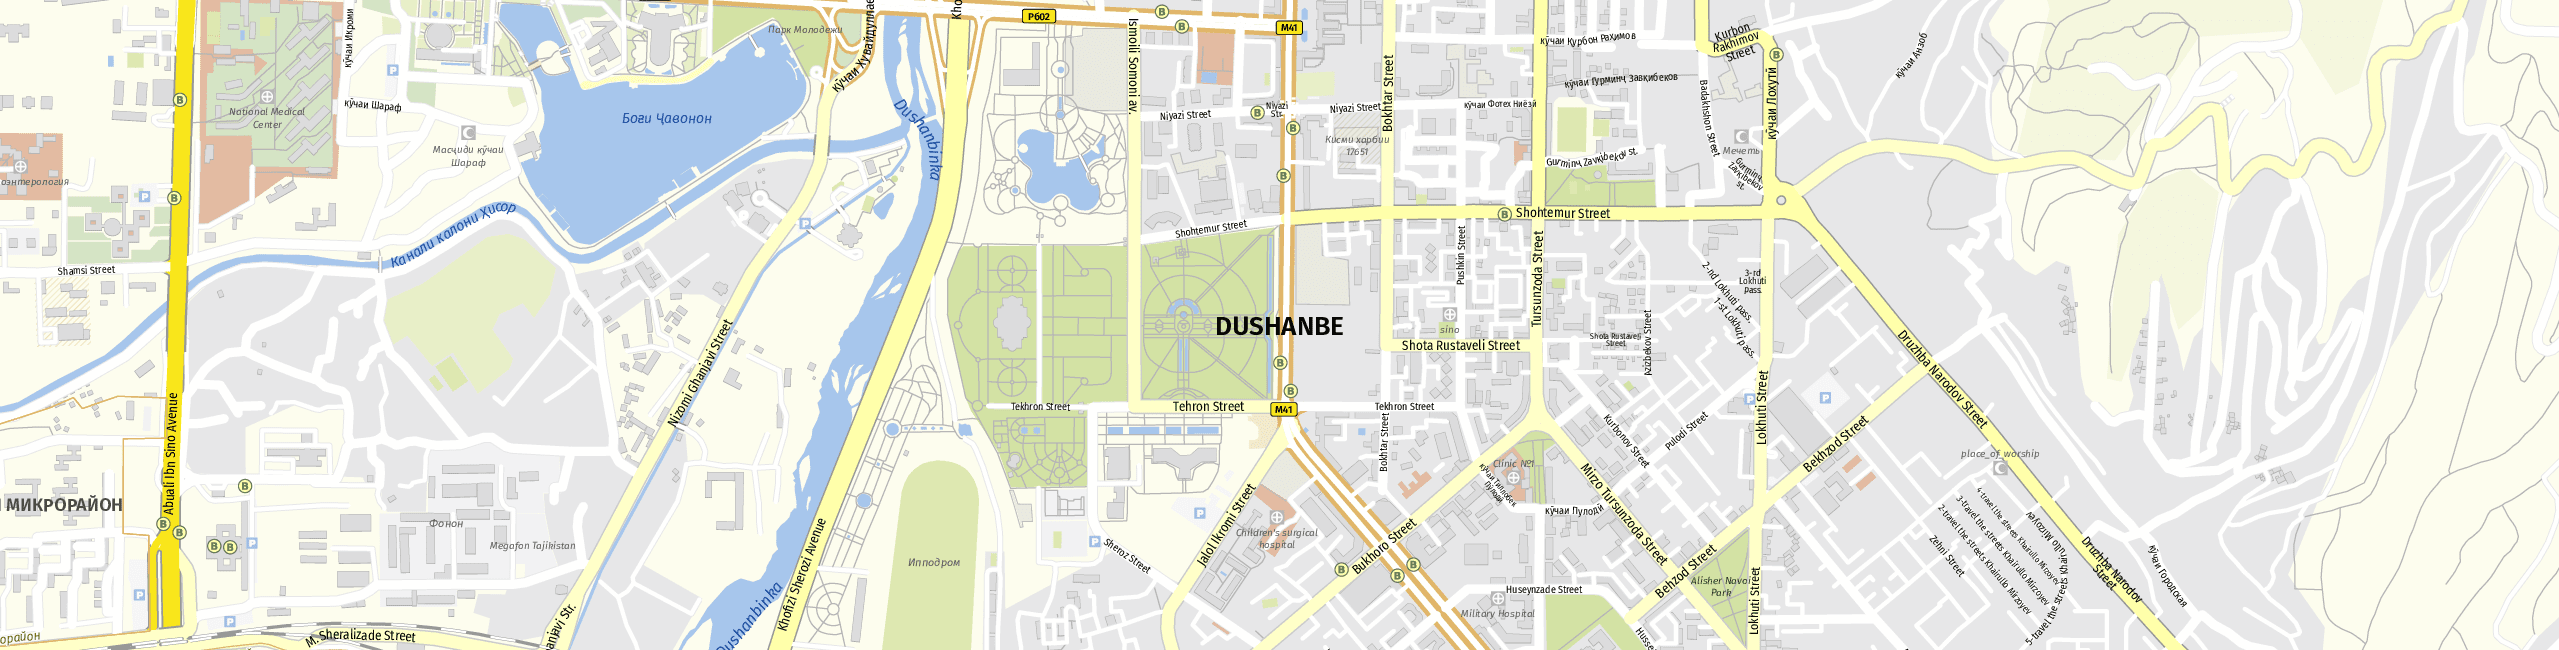 Stadtplan Dushanbe zum Downloaden.